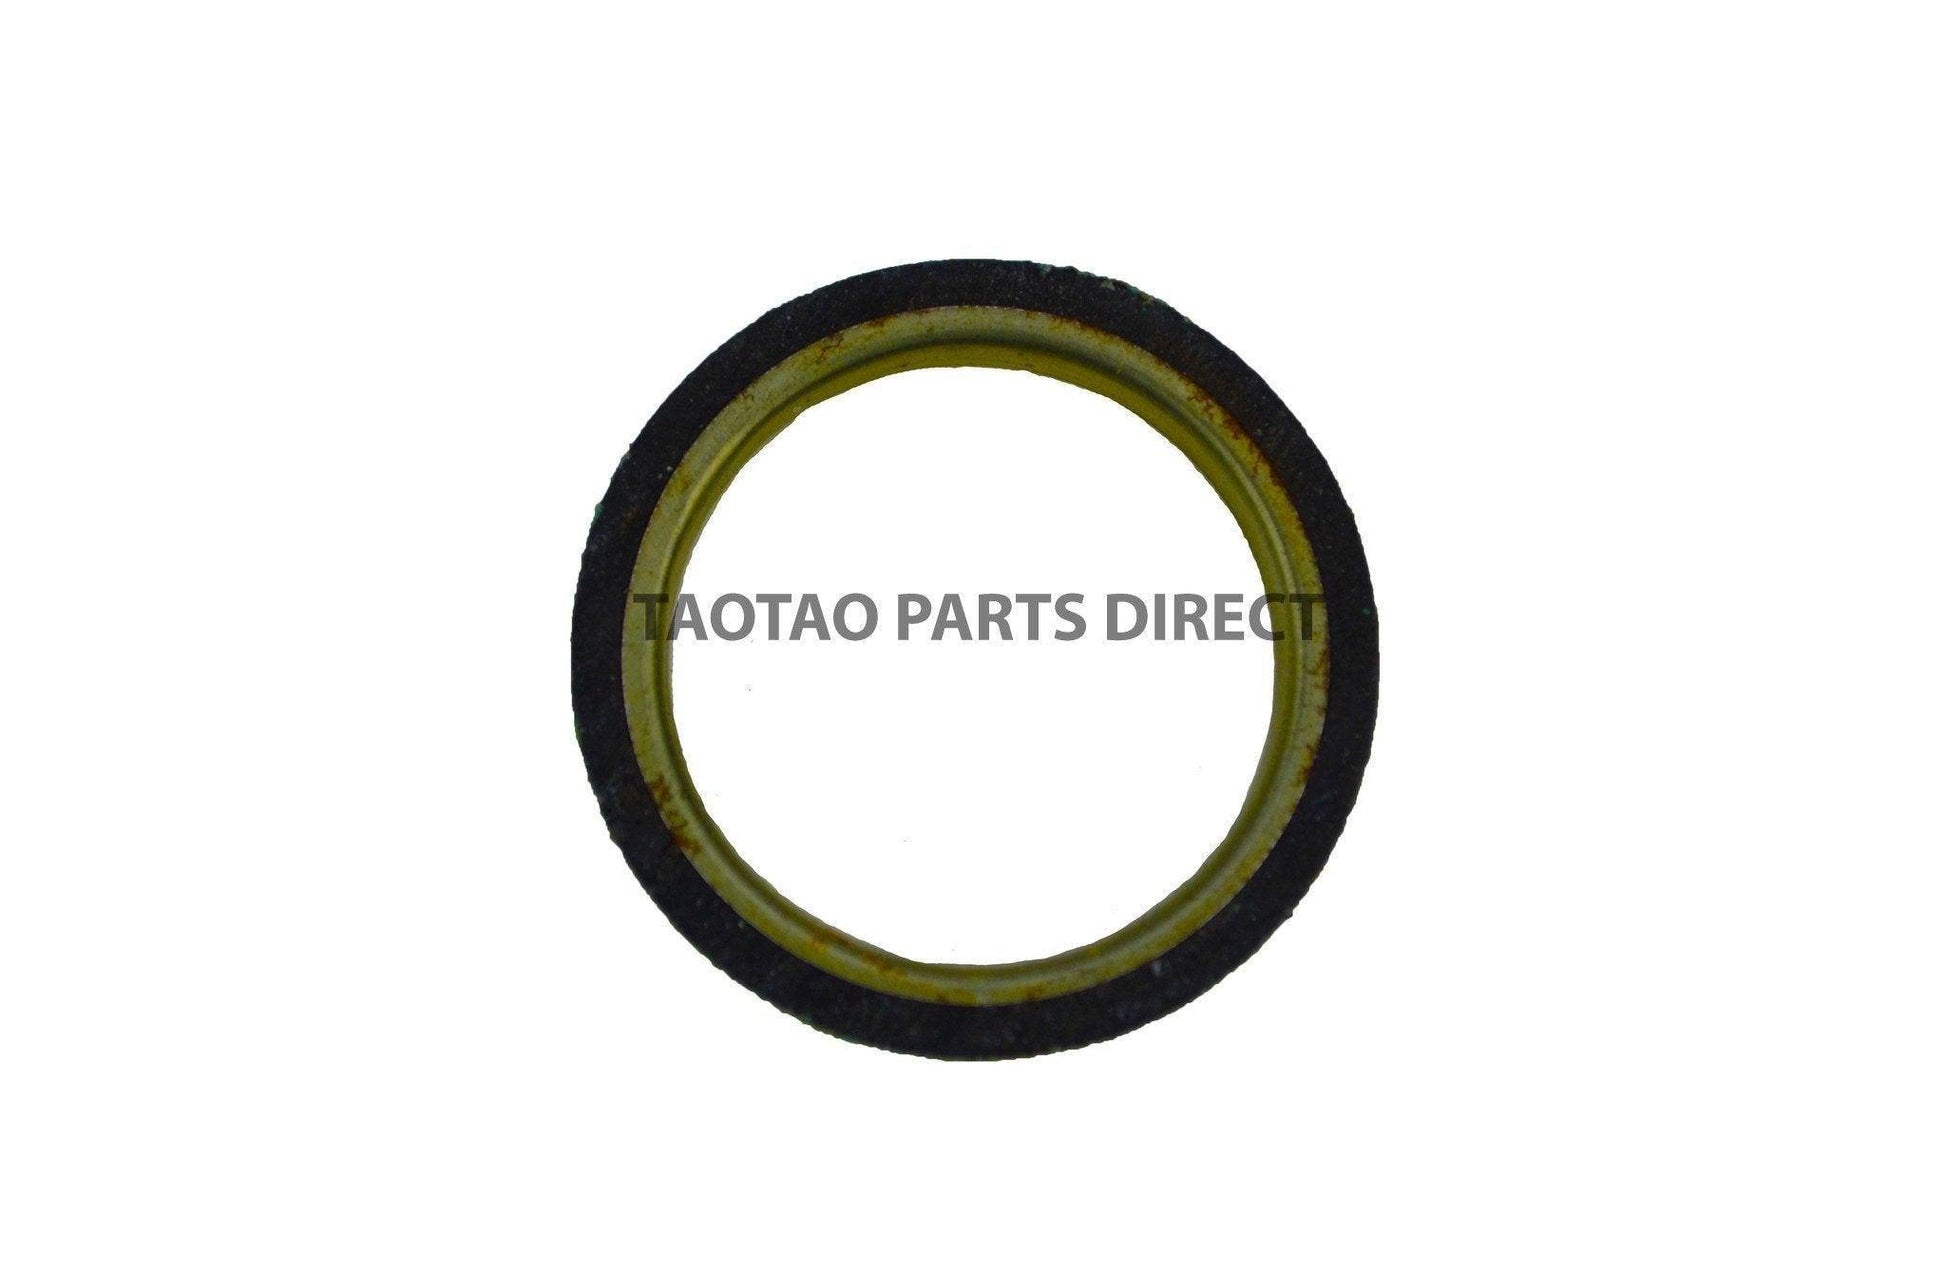 125cc Exhaust Gasket - TaoTao Parts Direct